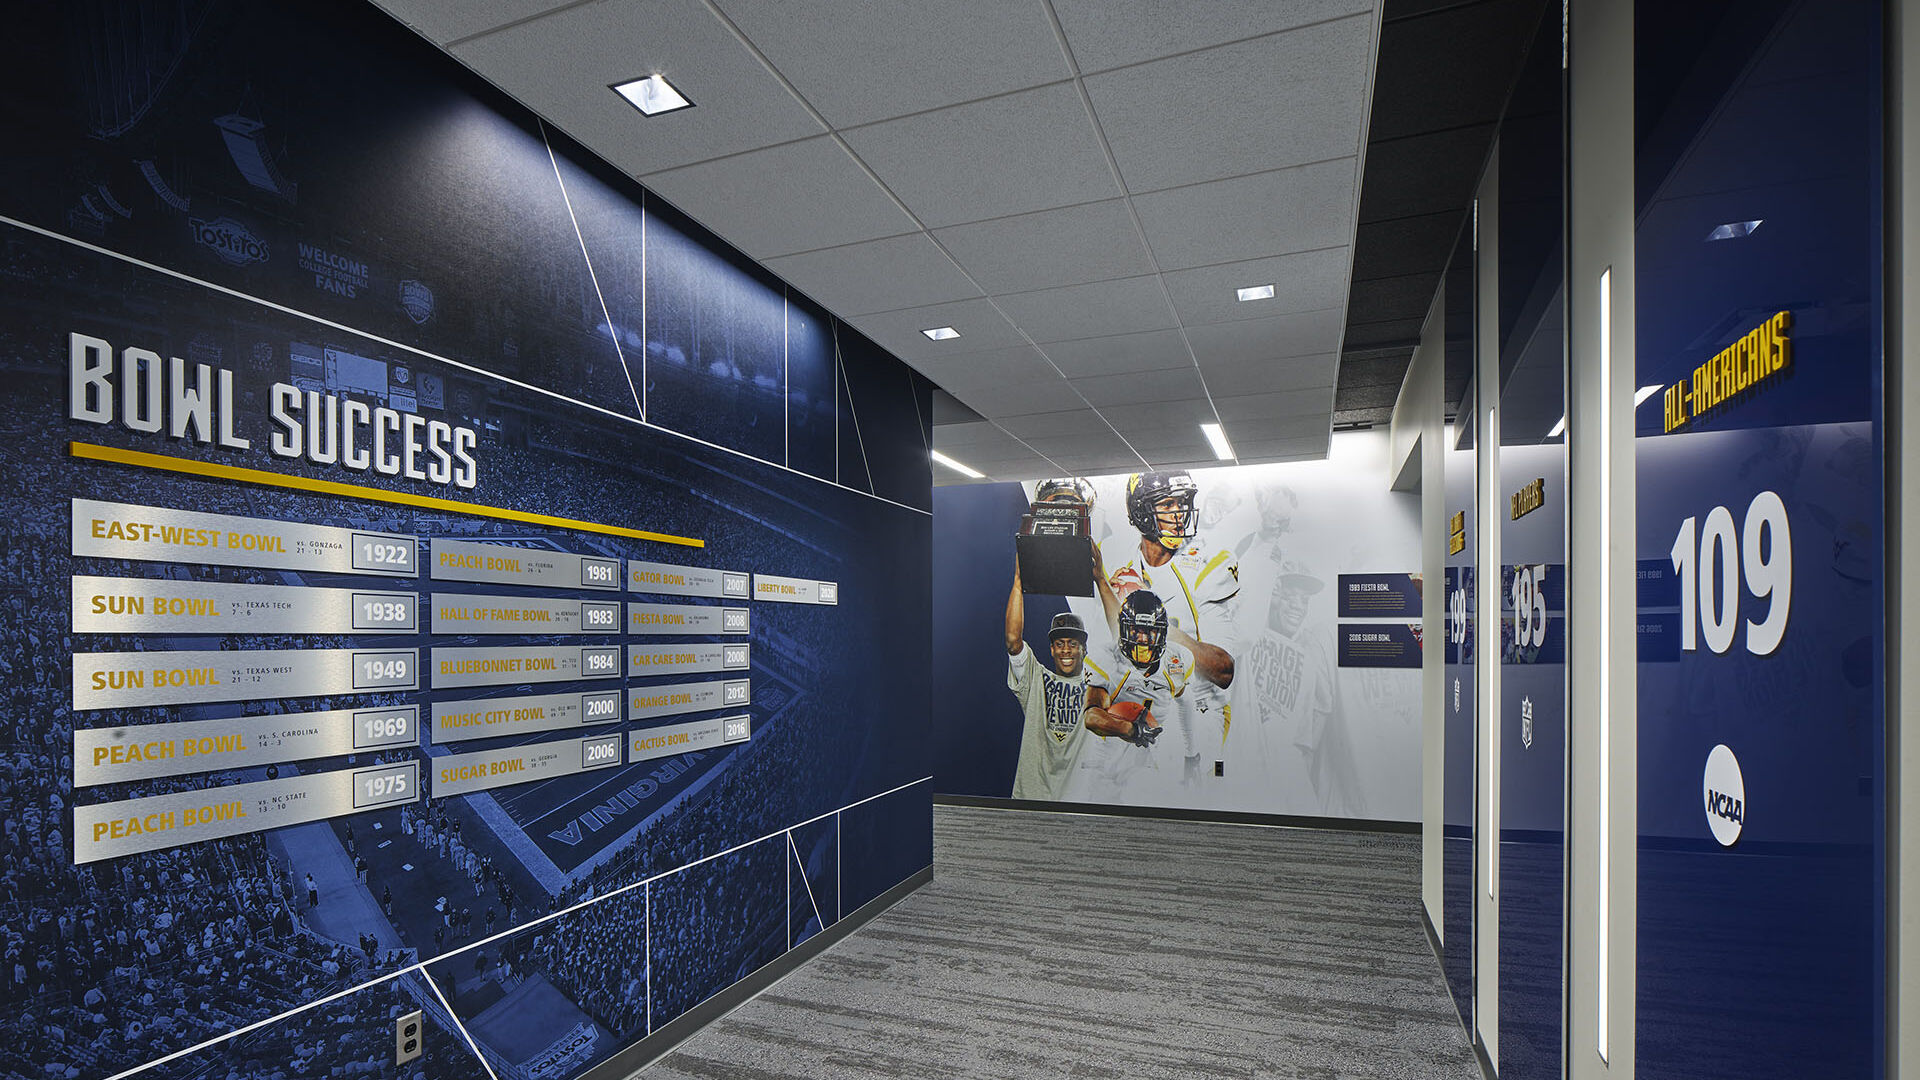 Milan Puskar Center Football Hallway displays honoring team accomplishments